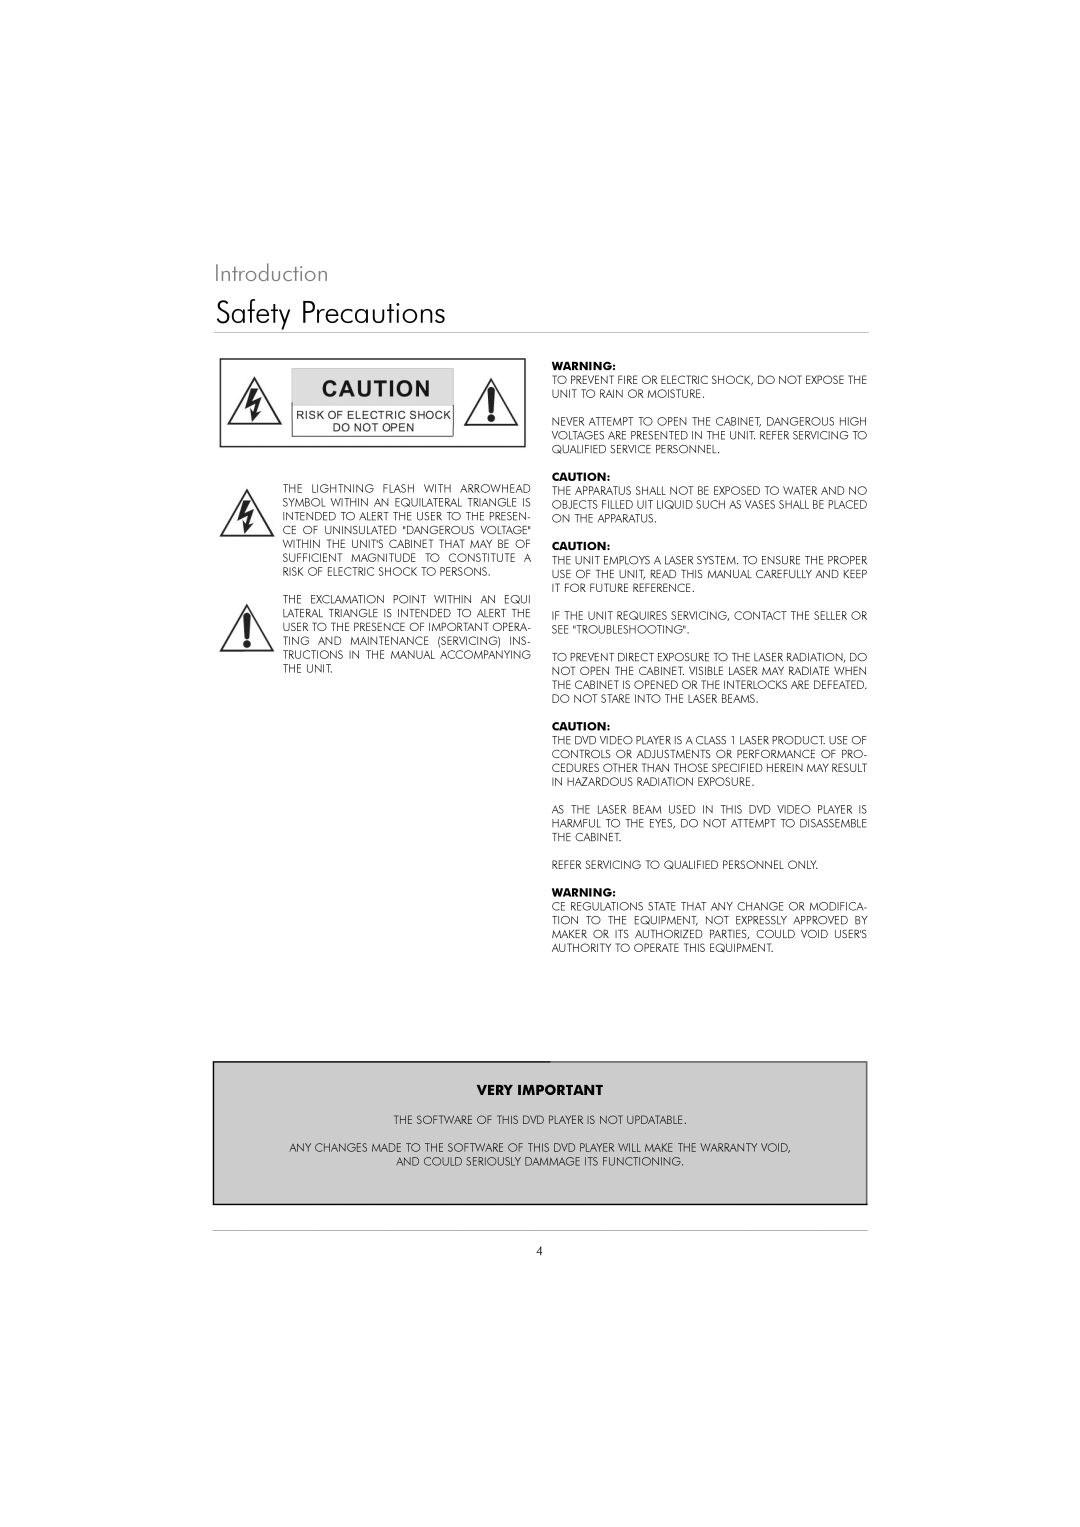 Kodak DVD 40 user manual Safety Precautions, Introduction, Very Important 